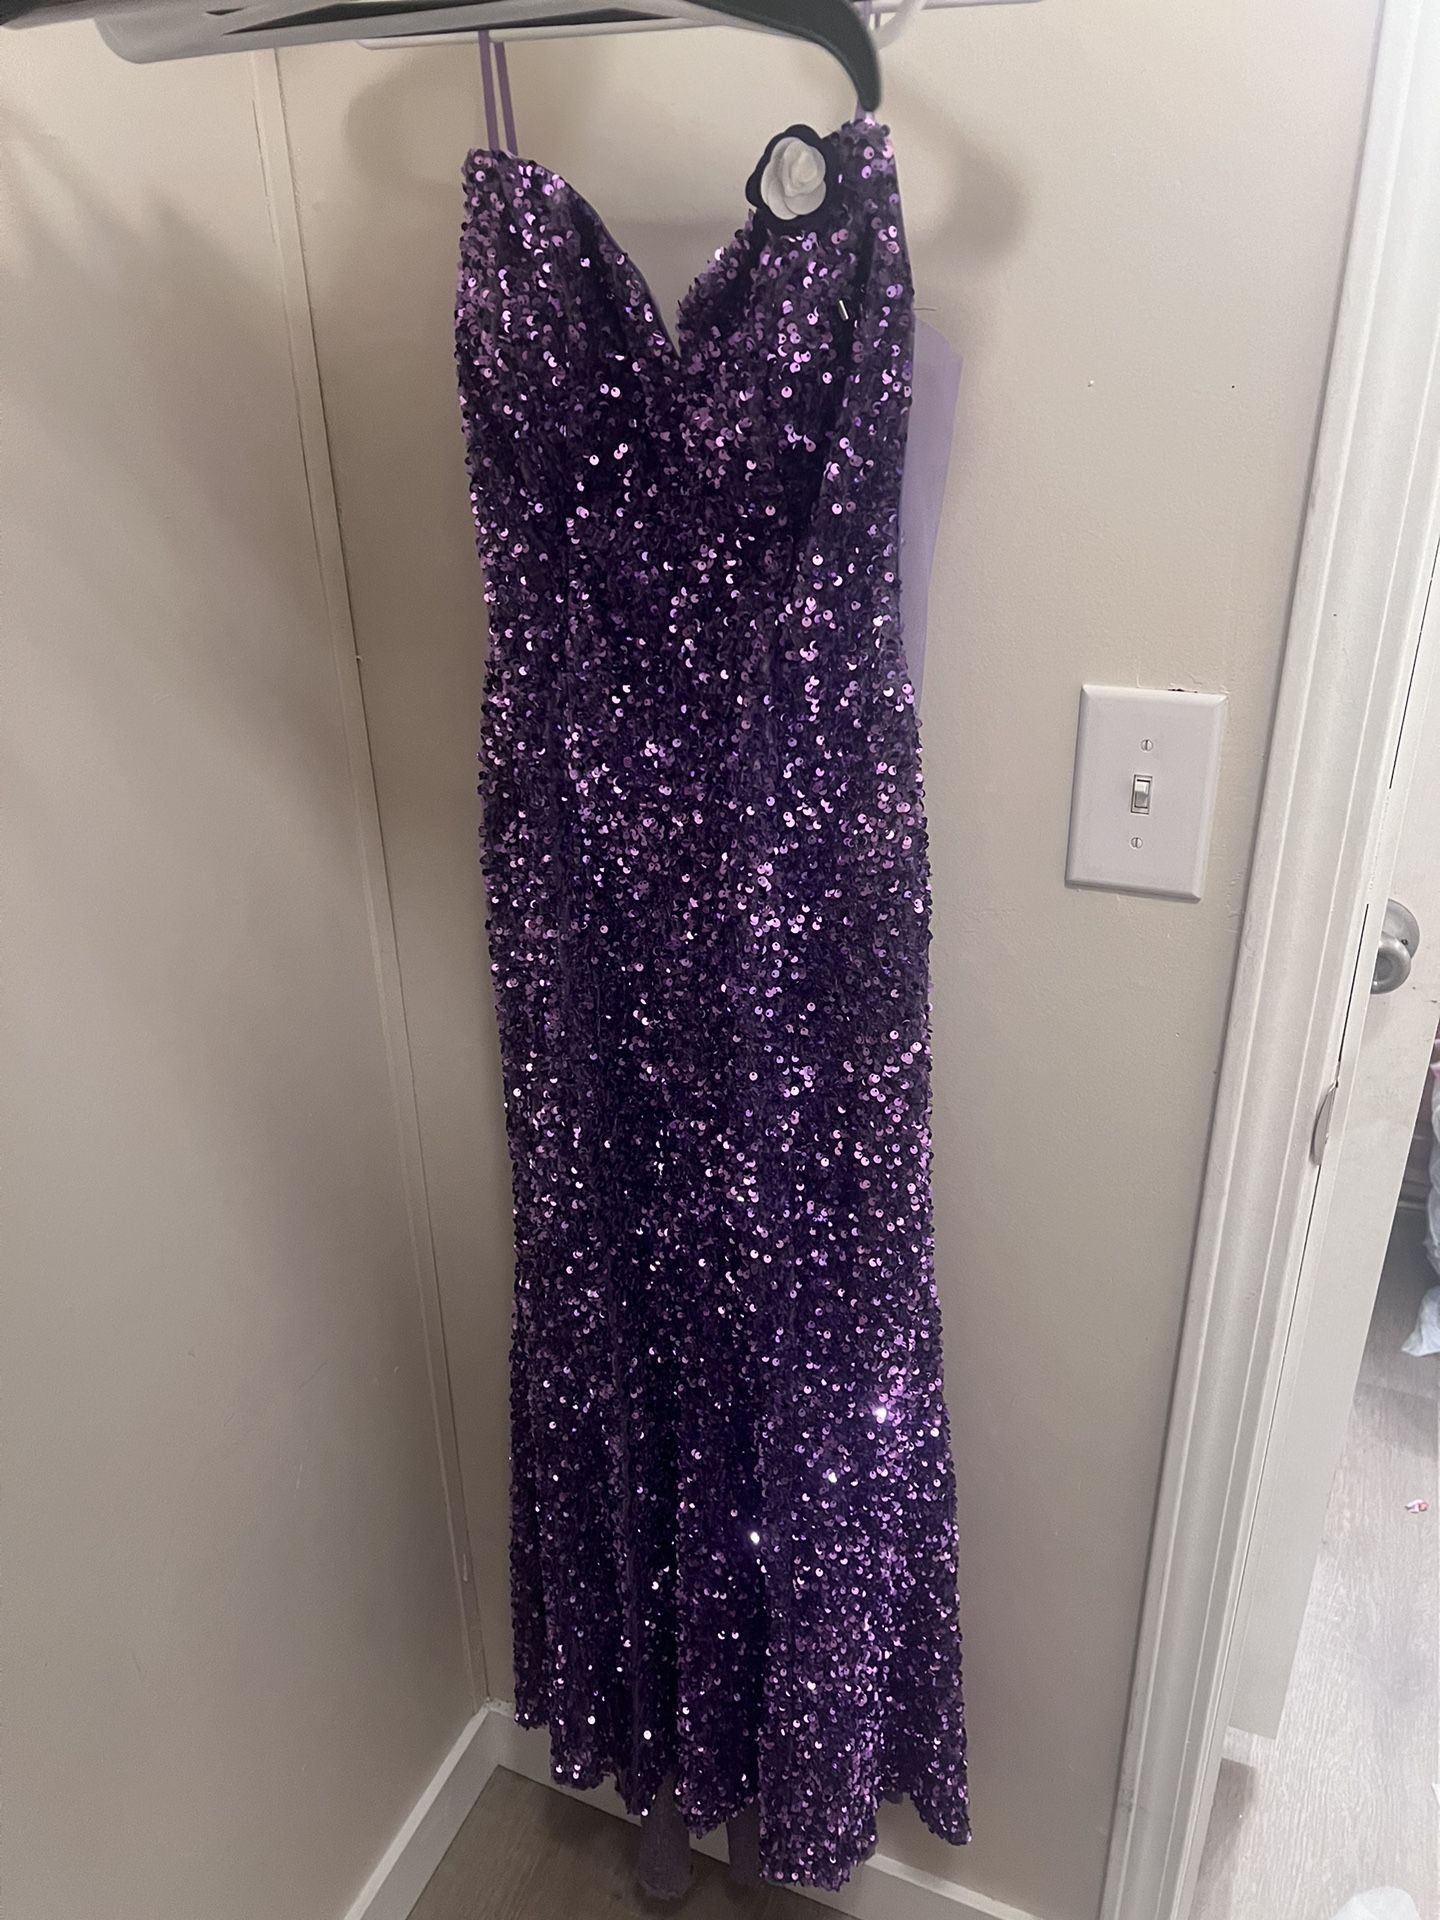 Homecoming/prom dress